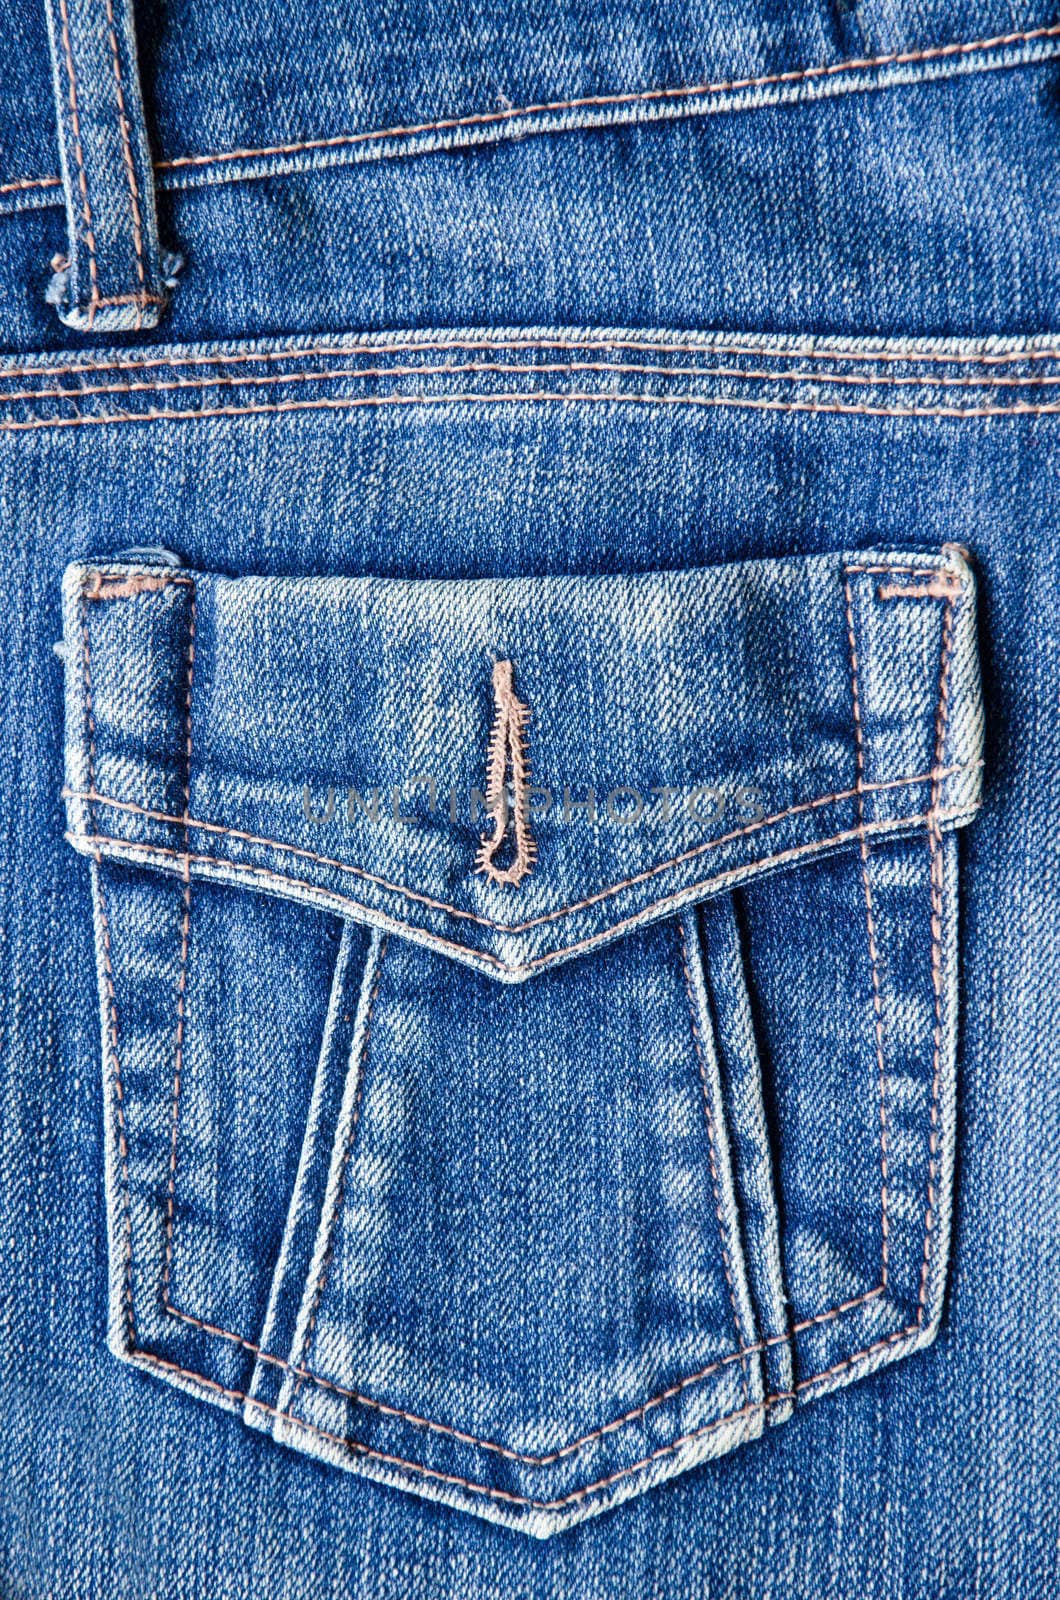 Blue jeans pocket. by Gamjai